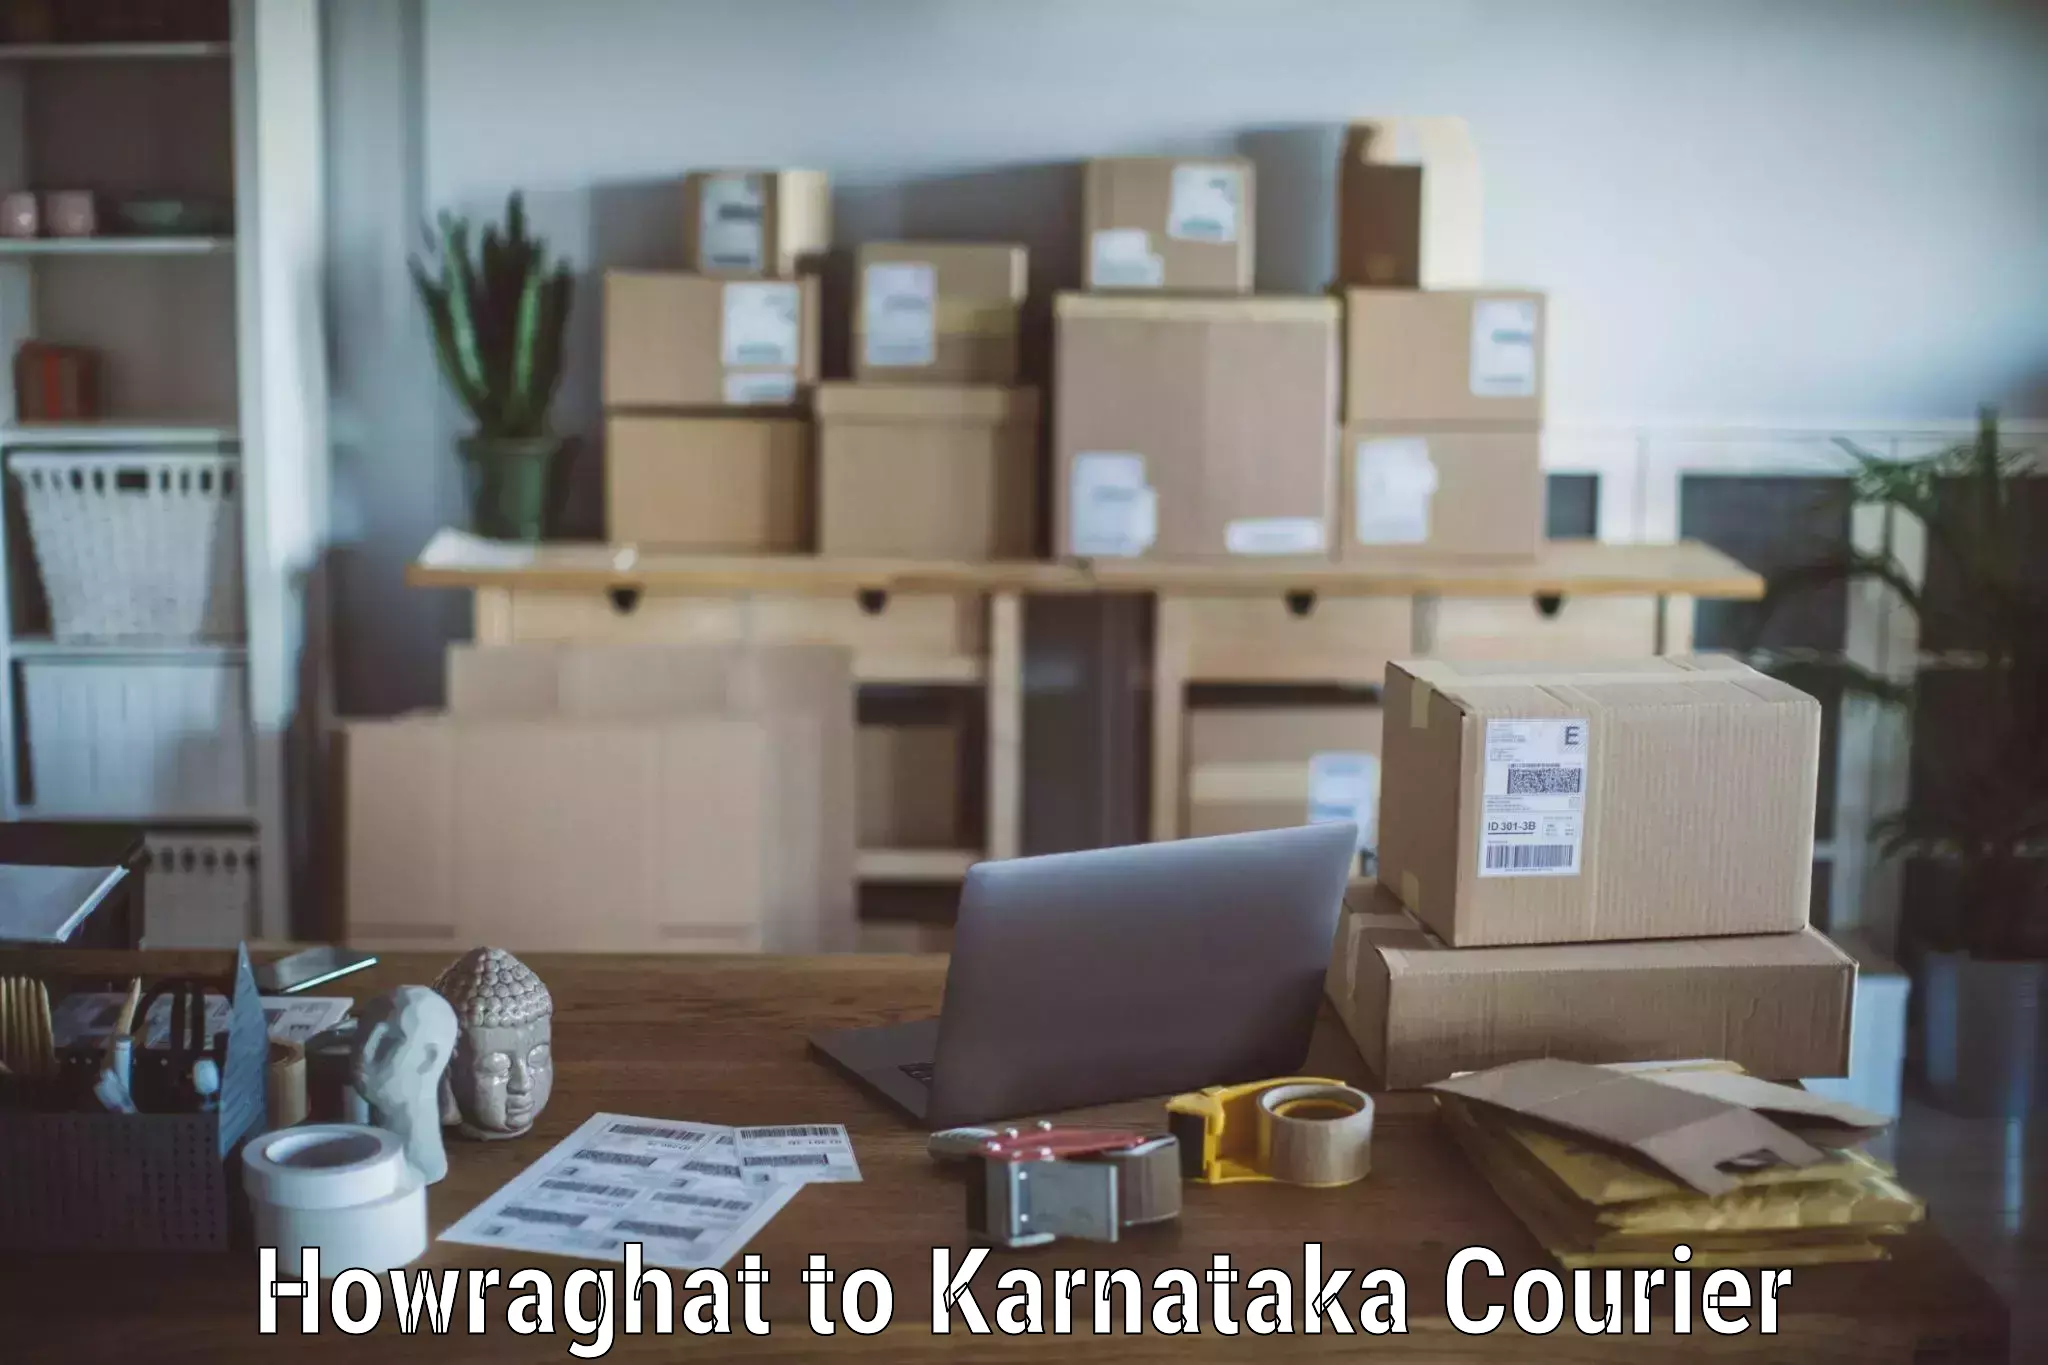 Quality moving company Howraghat to Karnataka